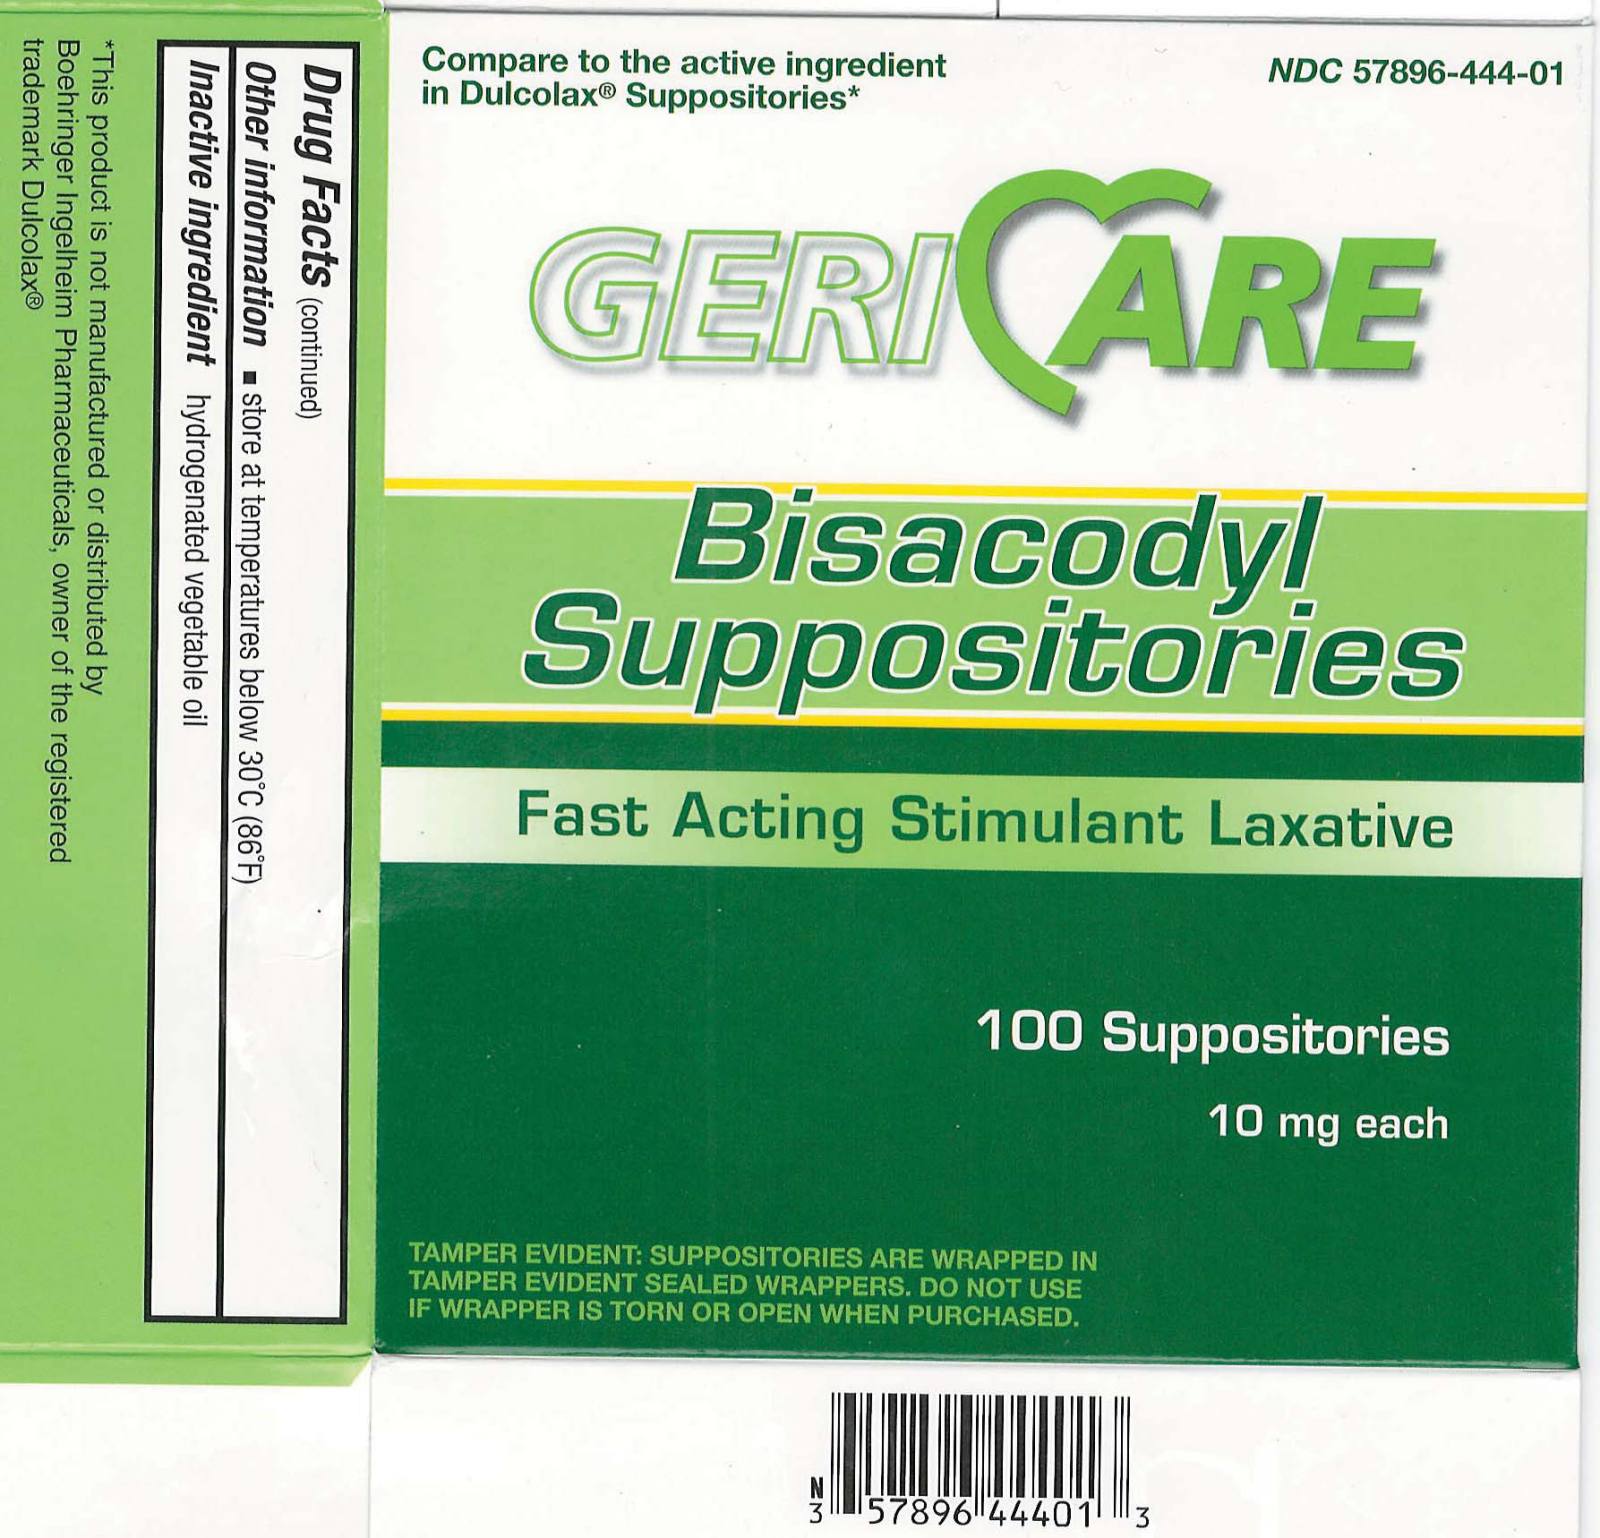 Bisacodyl 10 mg, Suppositories